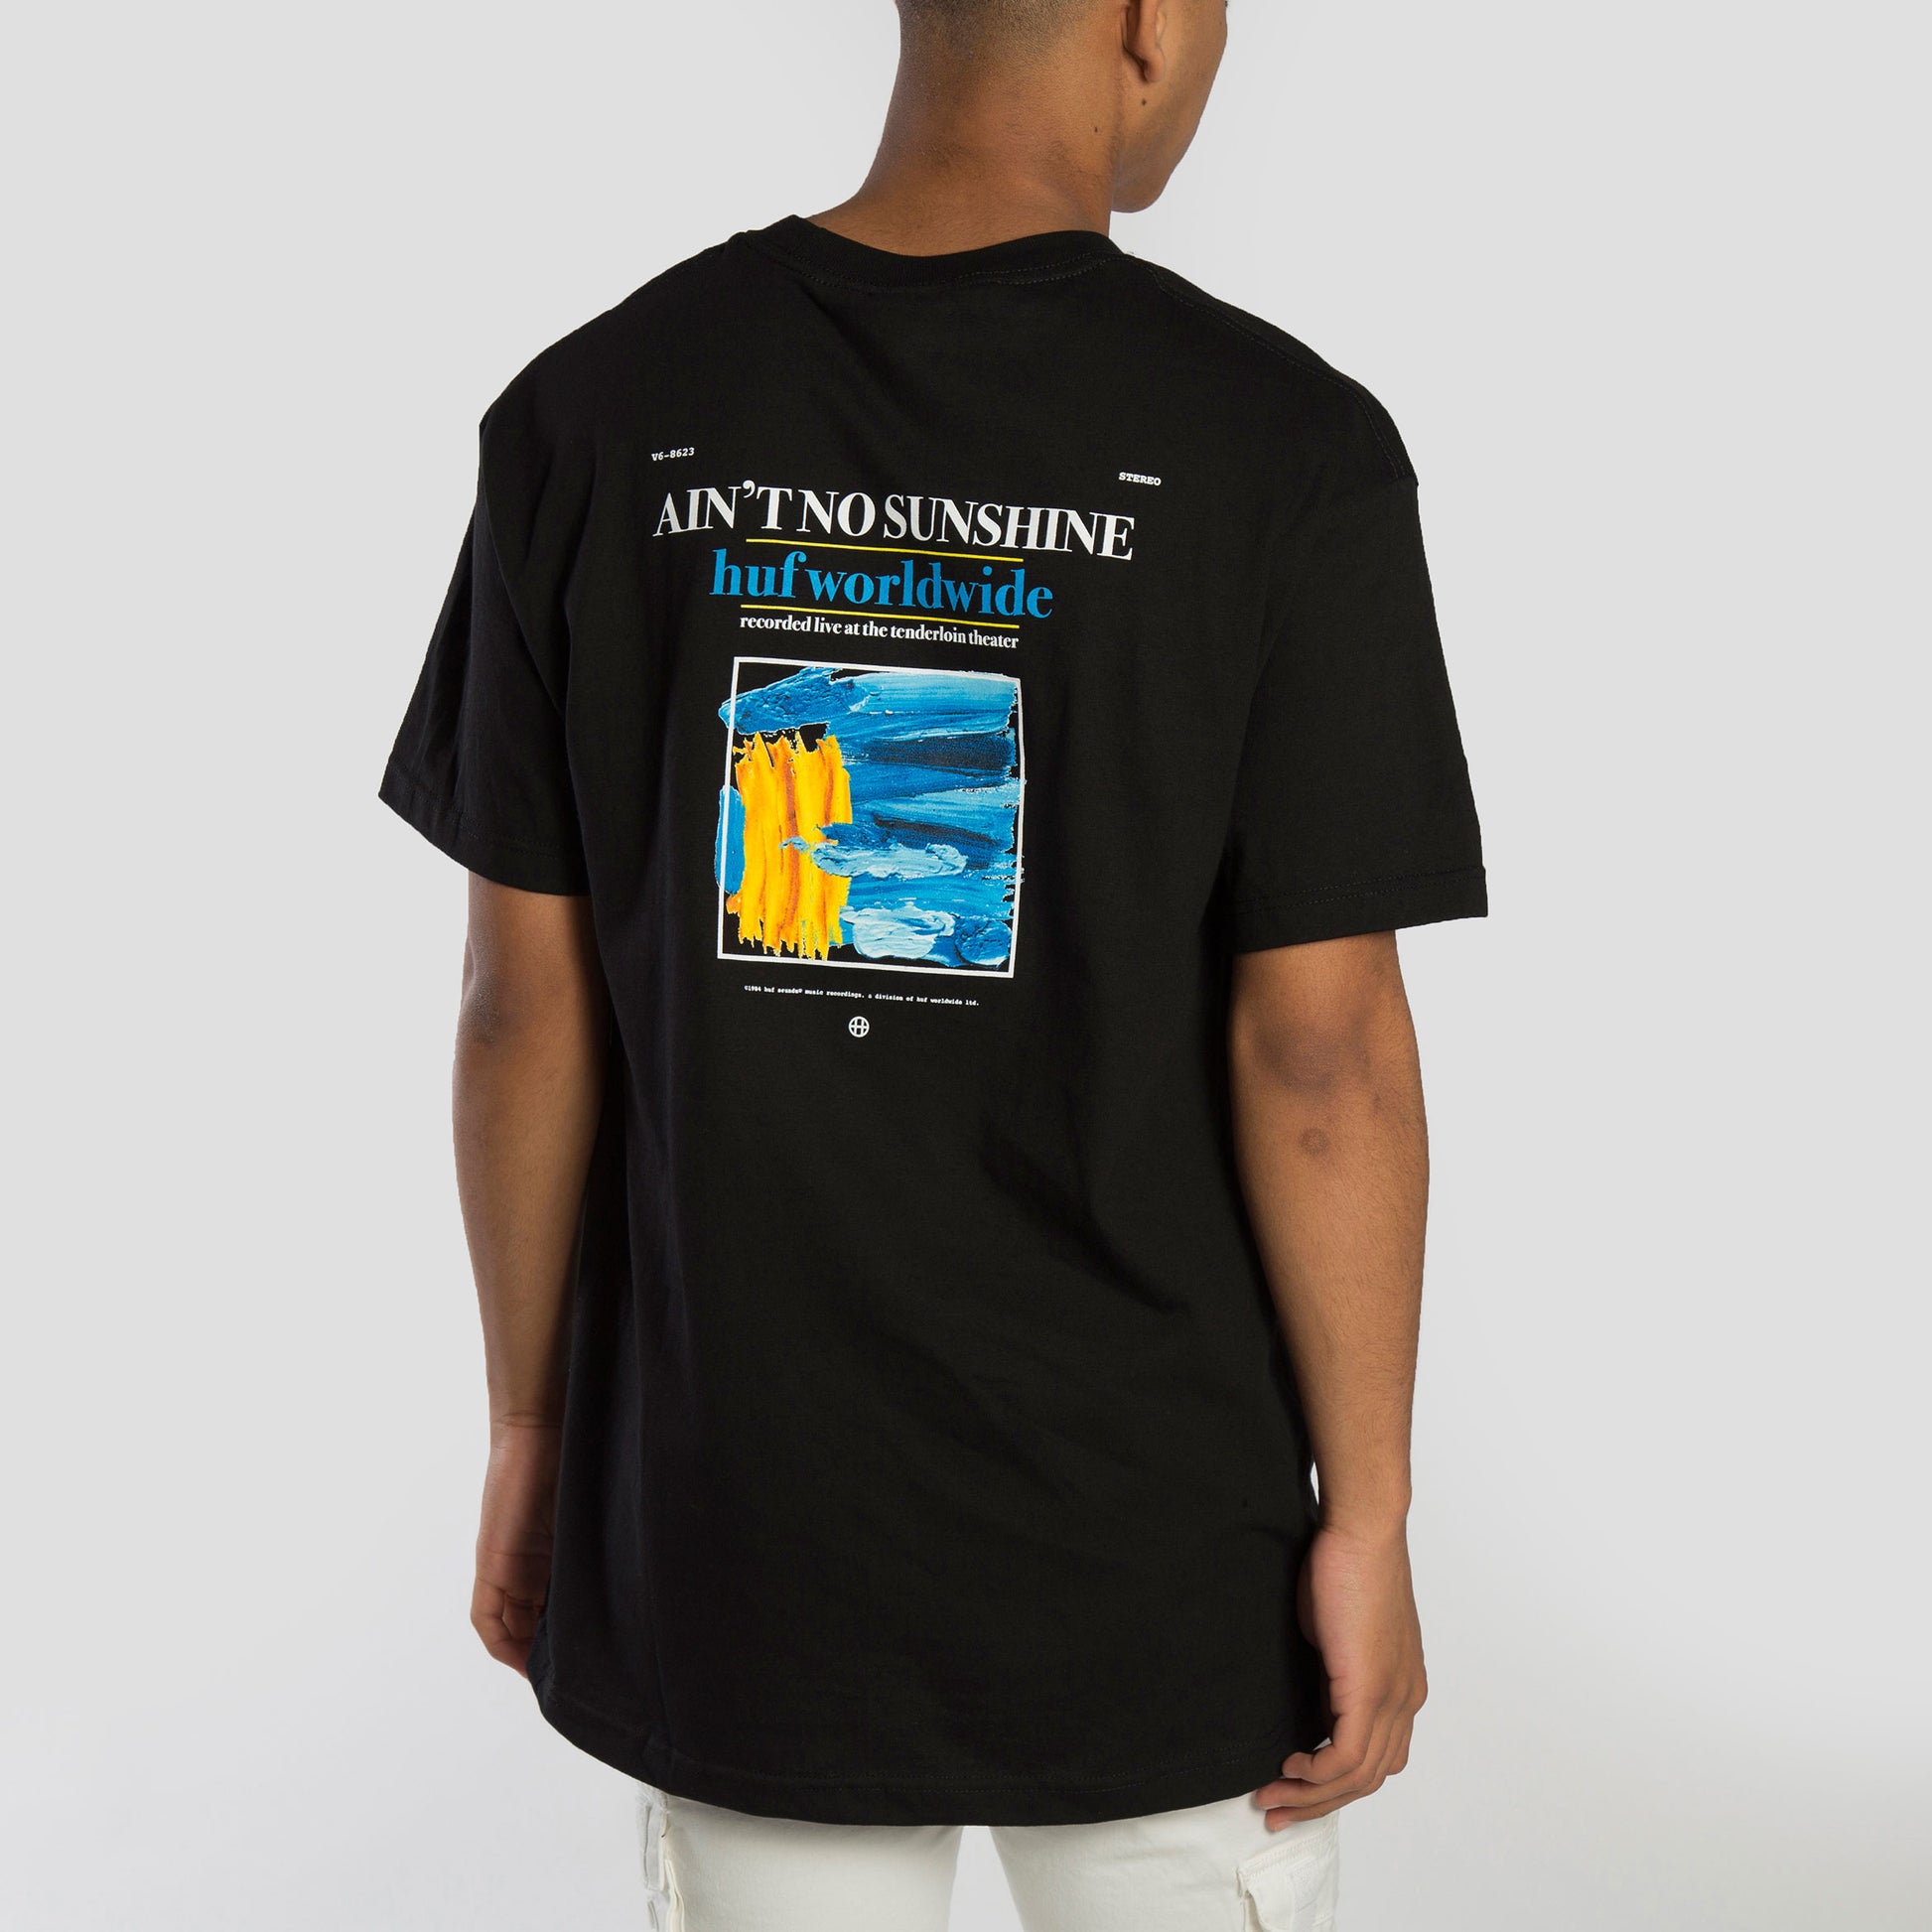 Huf Camiseta Aint No Sunshine - TS00994-BLK - Colección Chico